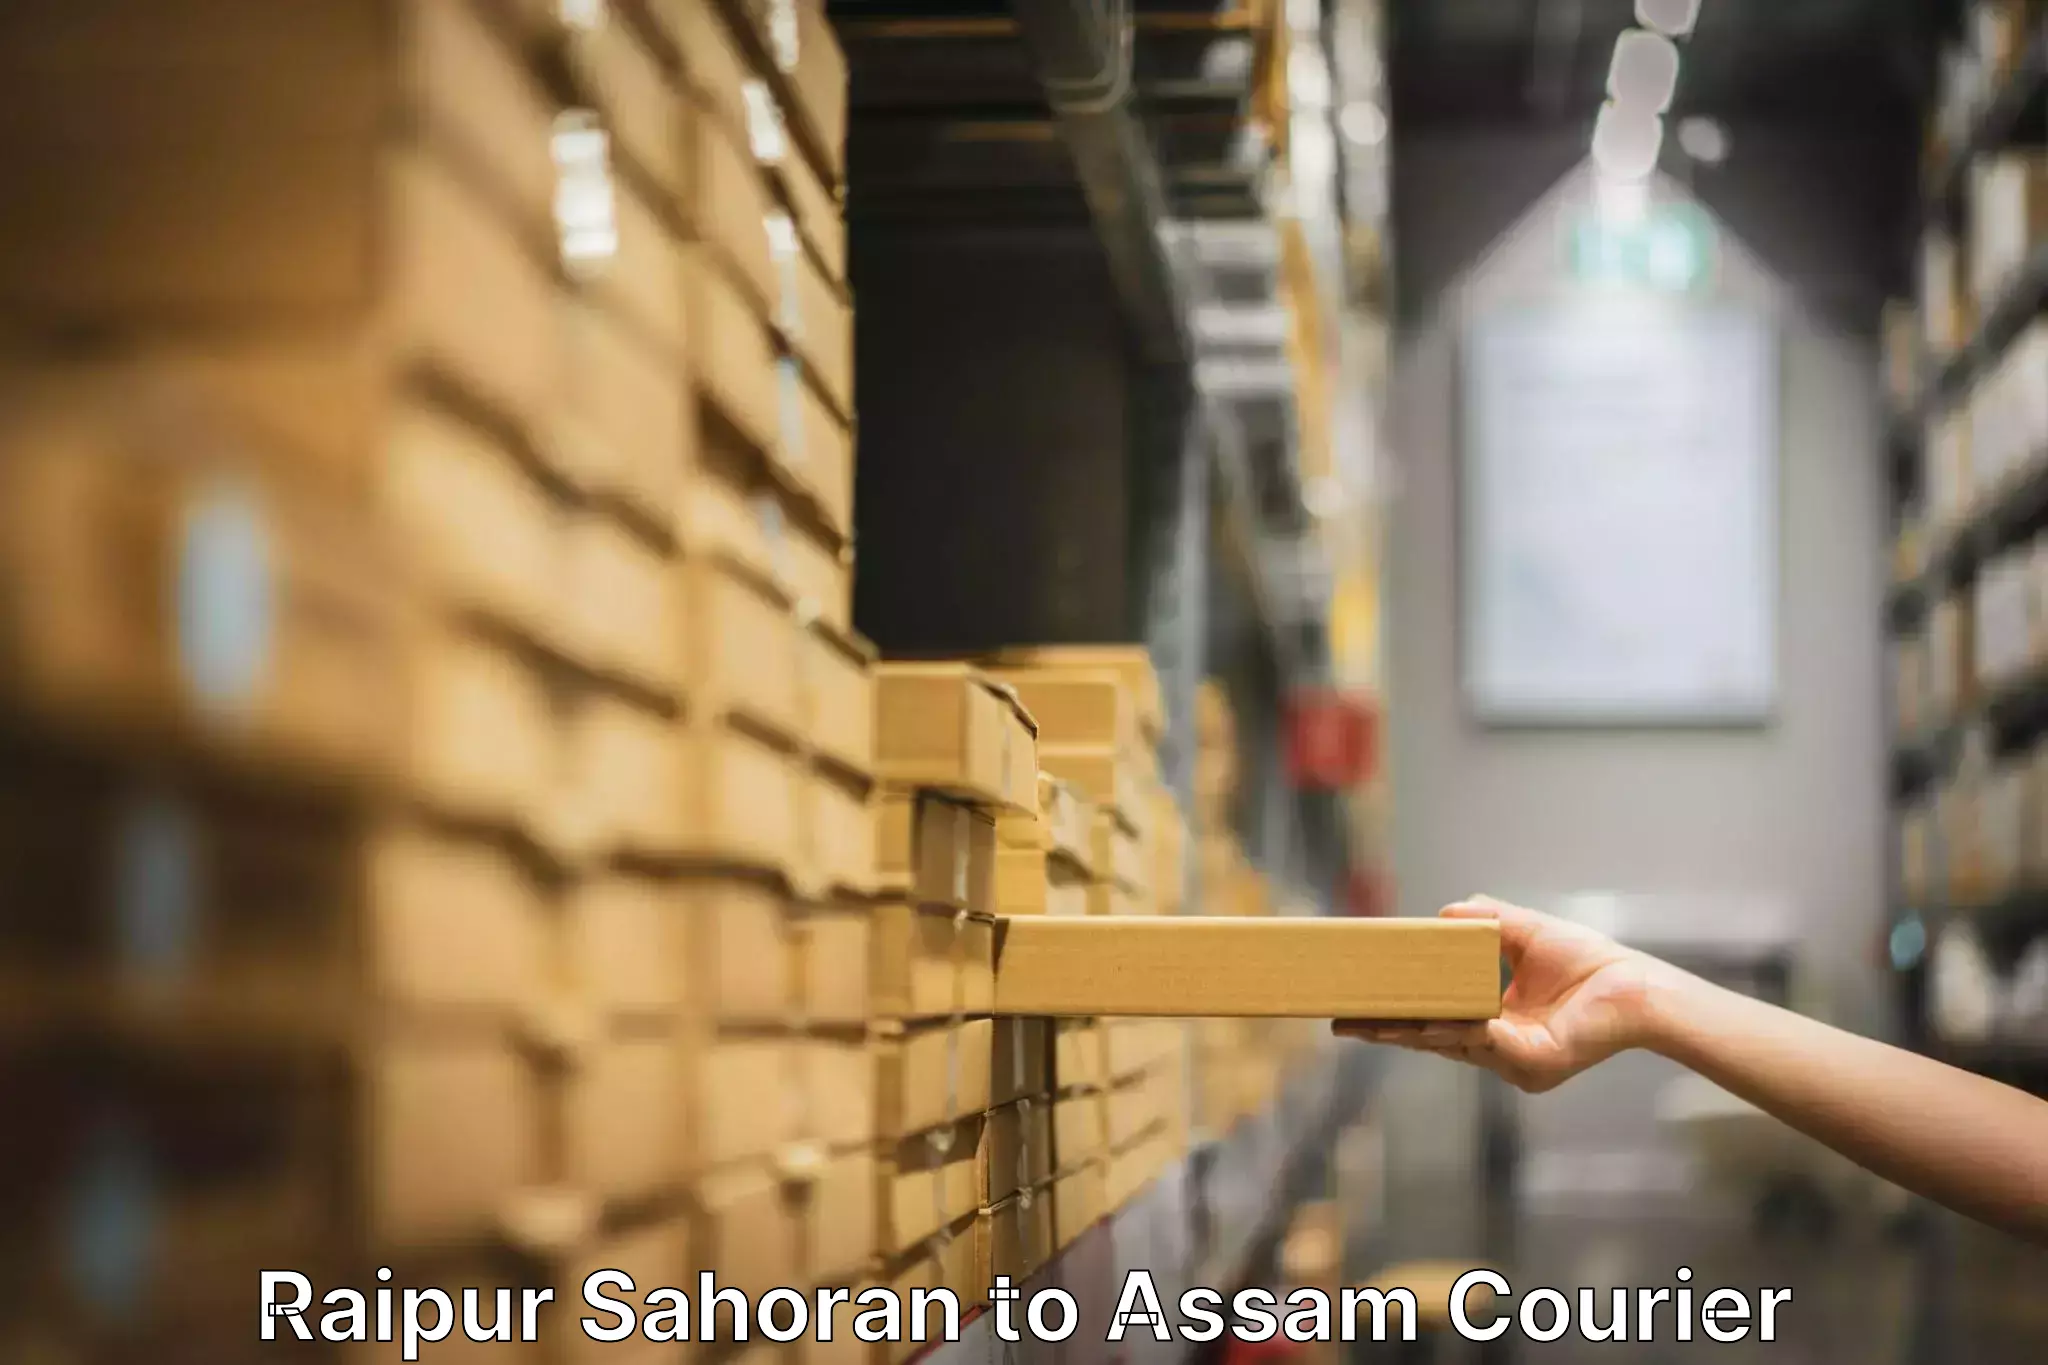 Nationwide furniture movers Raipur Sahoran to Lala Assam